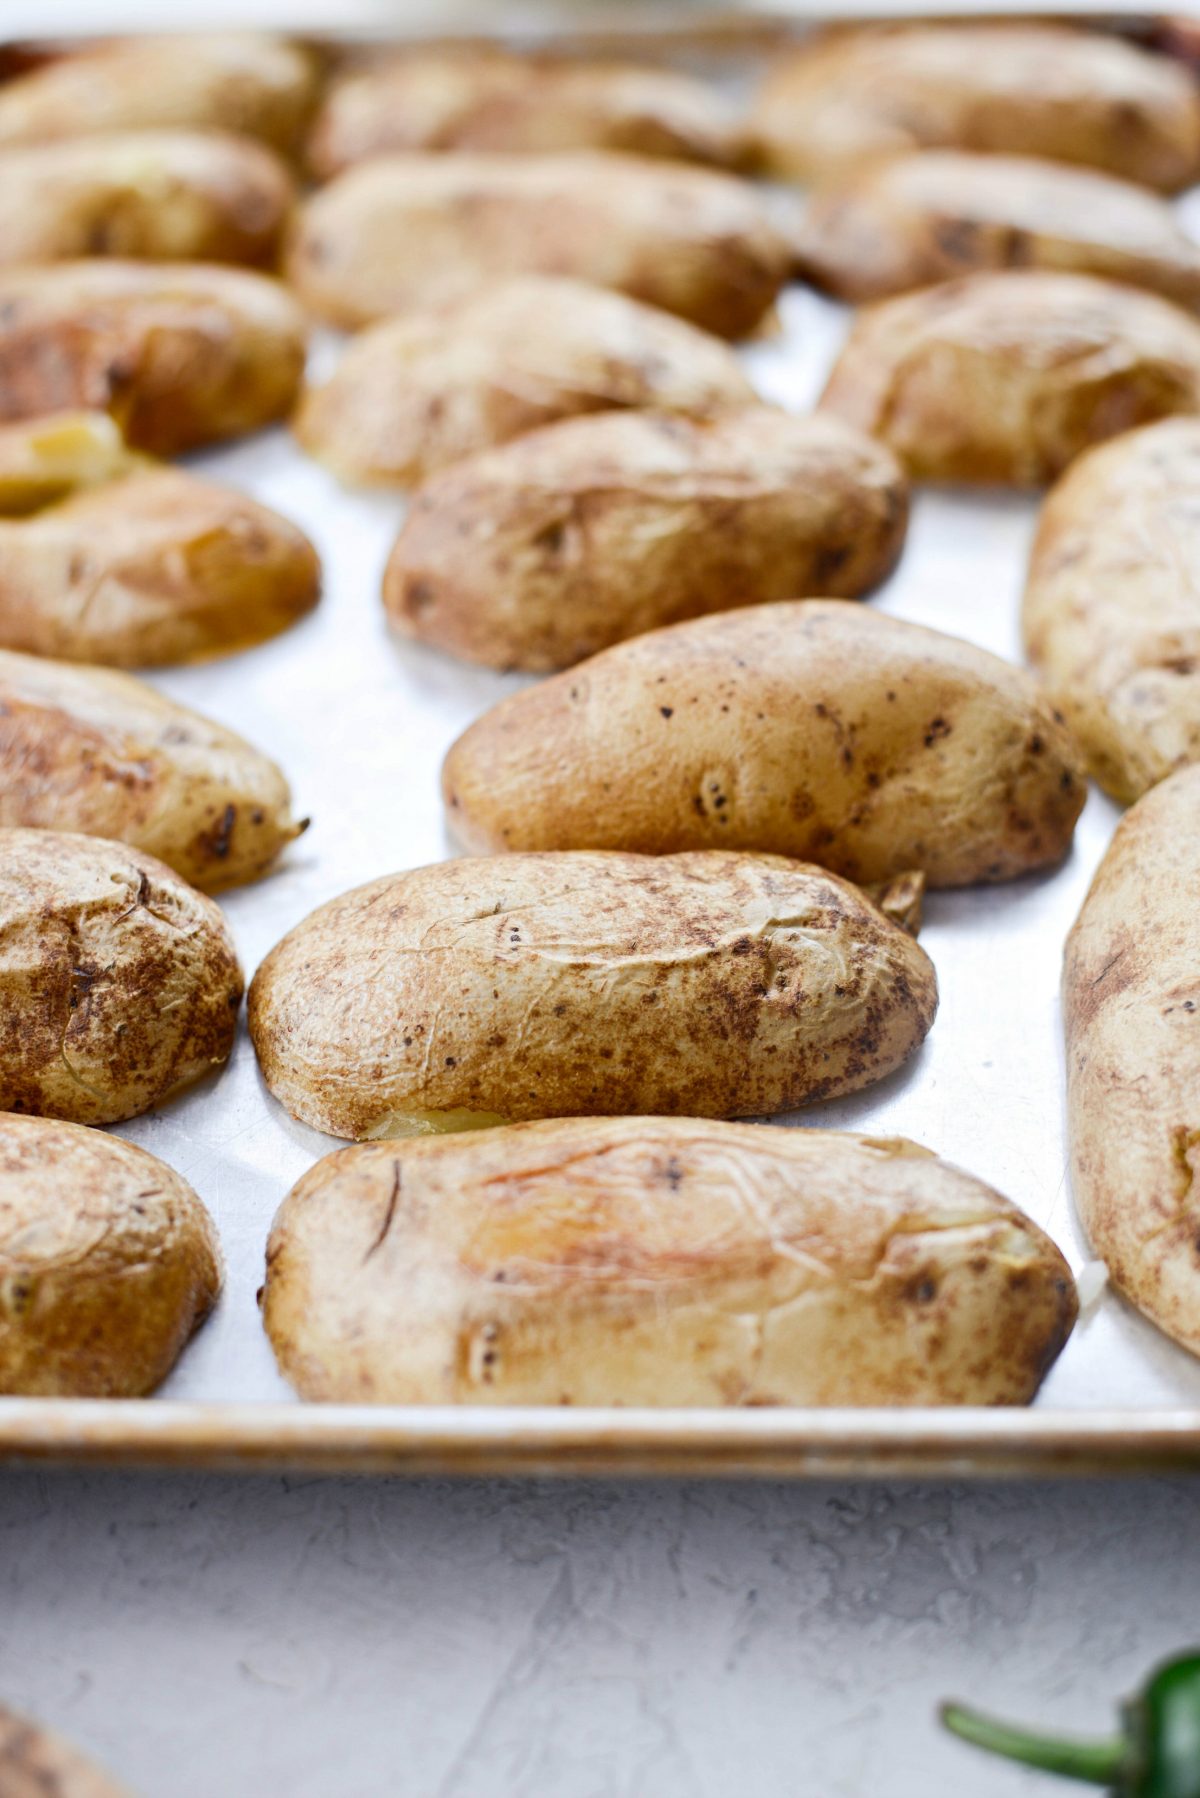 invert potato skins then broil